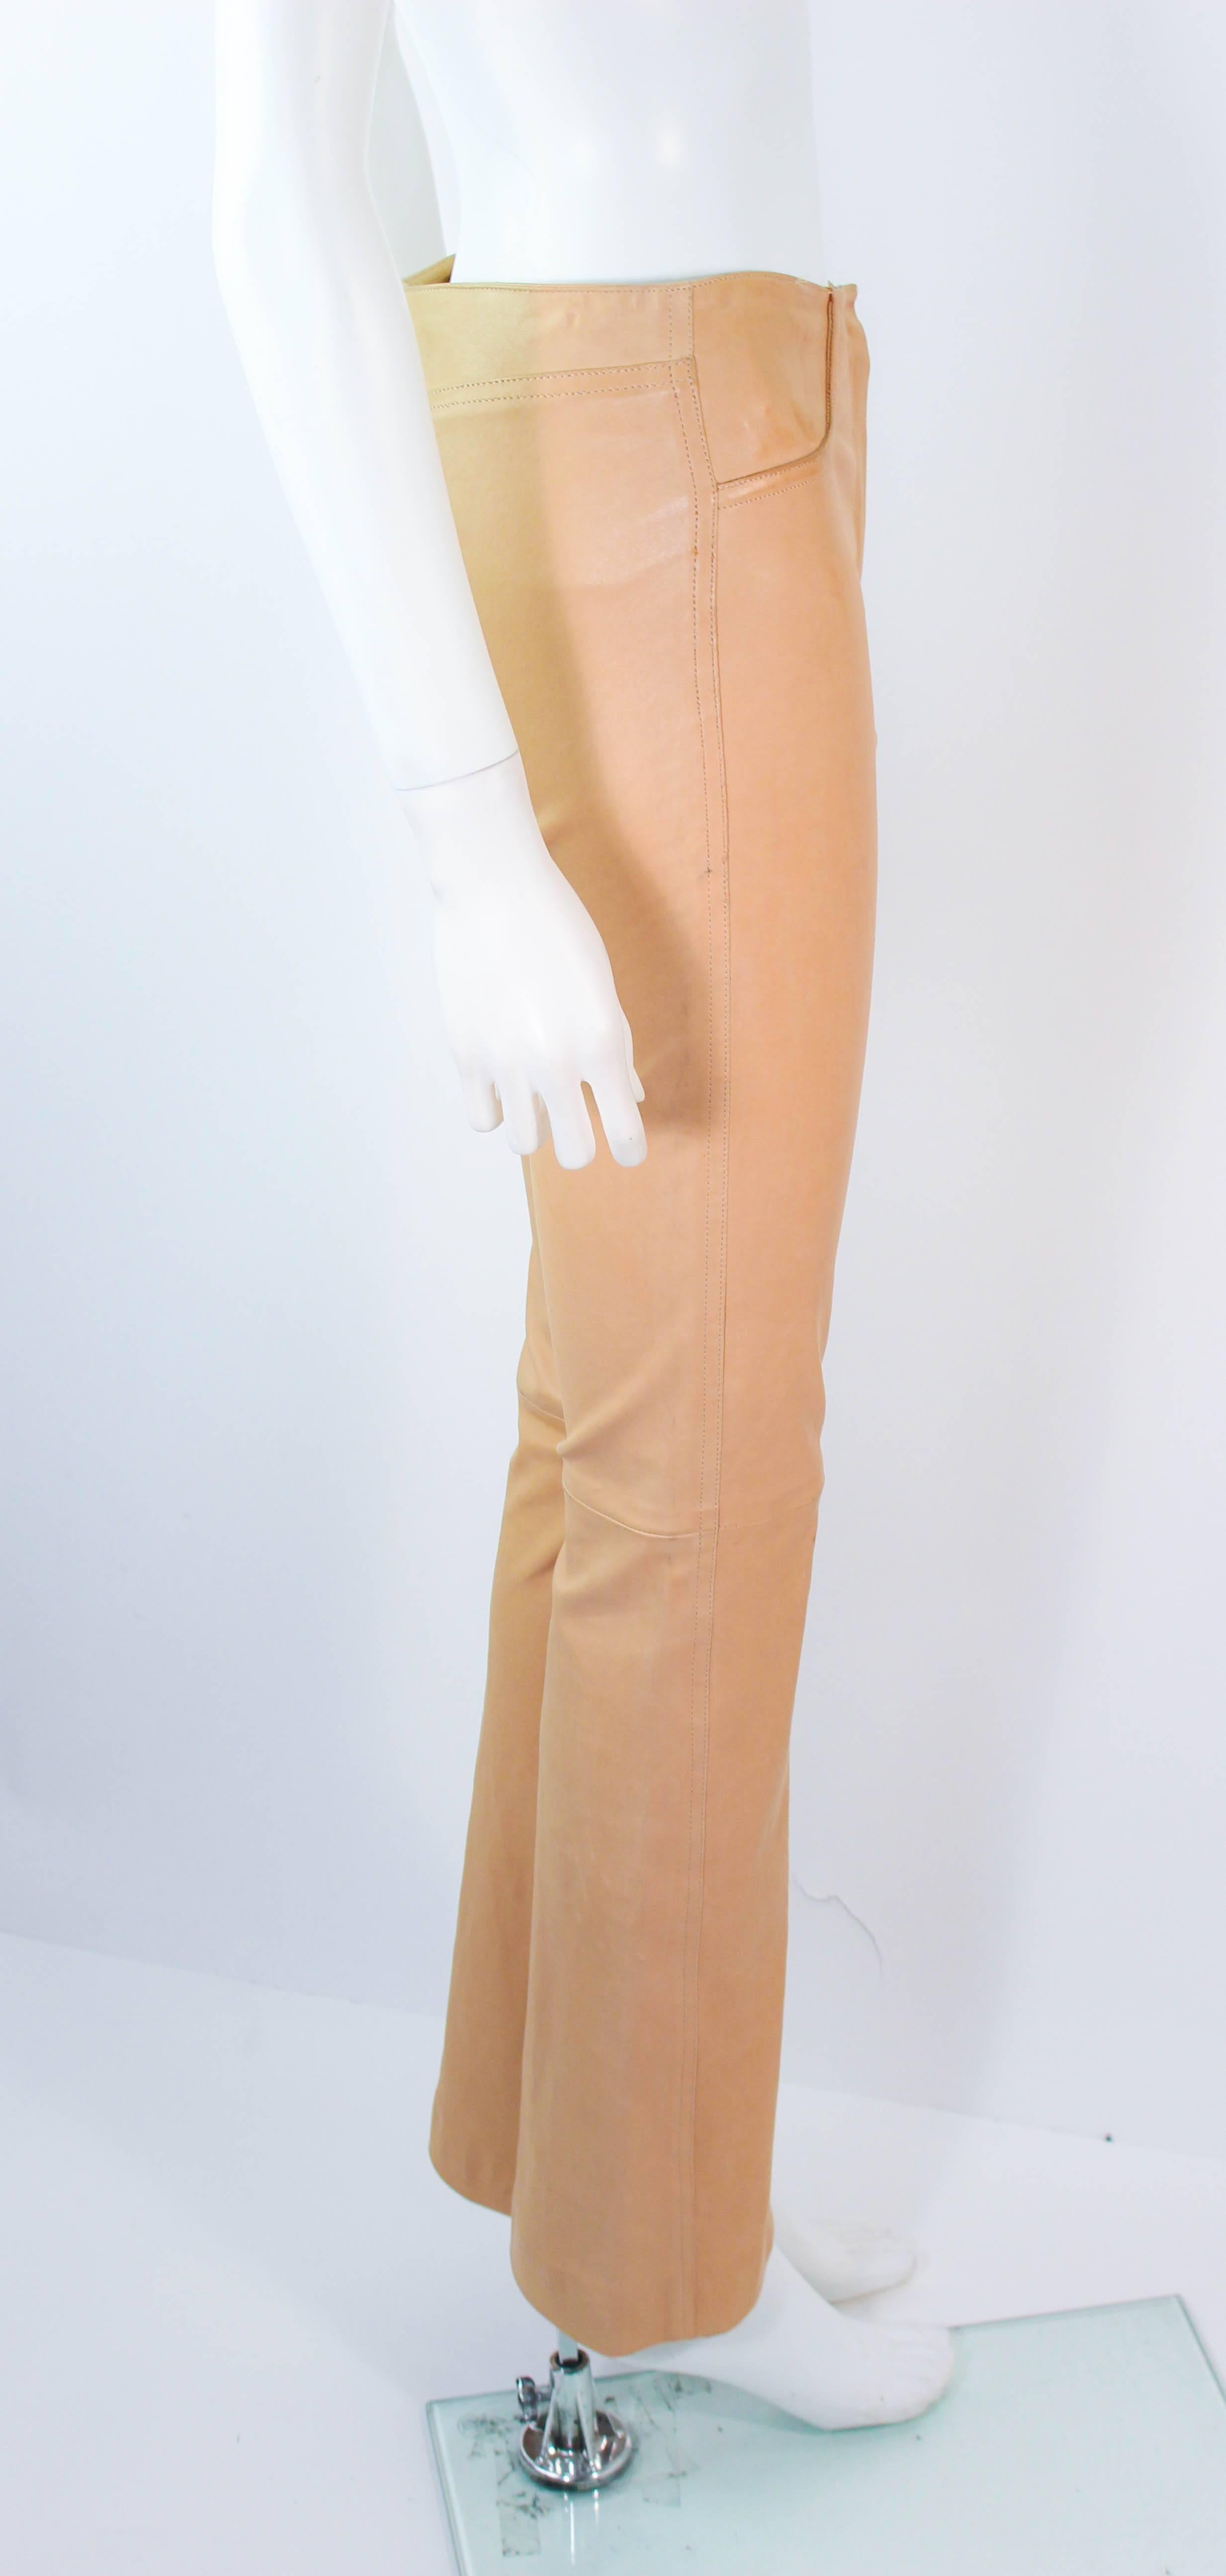 JEAN CLAUDE JITROIS Vintage Stretch Nude Leather Pants Size 0 2 38 1